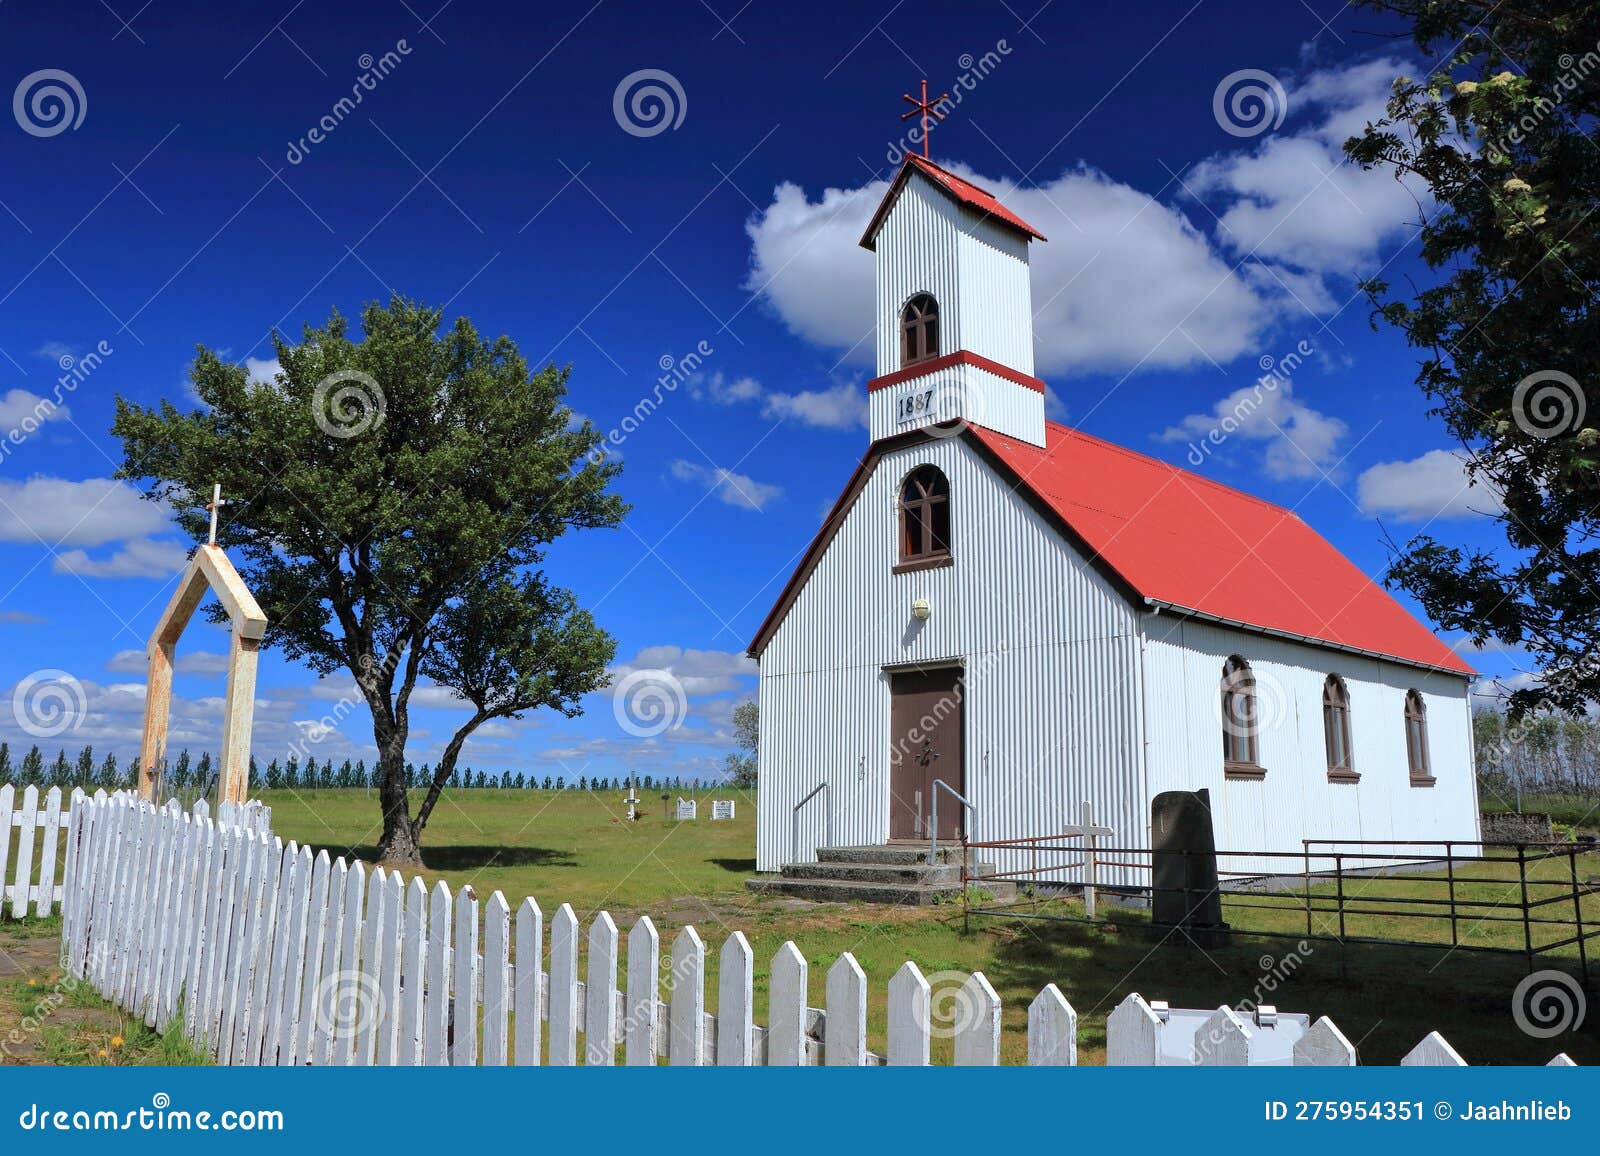 https://thumbs.dreamstime.com/z/beautiful-historic-church-arbaejar-near-hella-located-along-highway-towards-hekla-volcano-southwestern-iceland-275954351.jpg